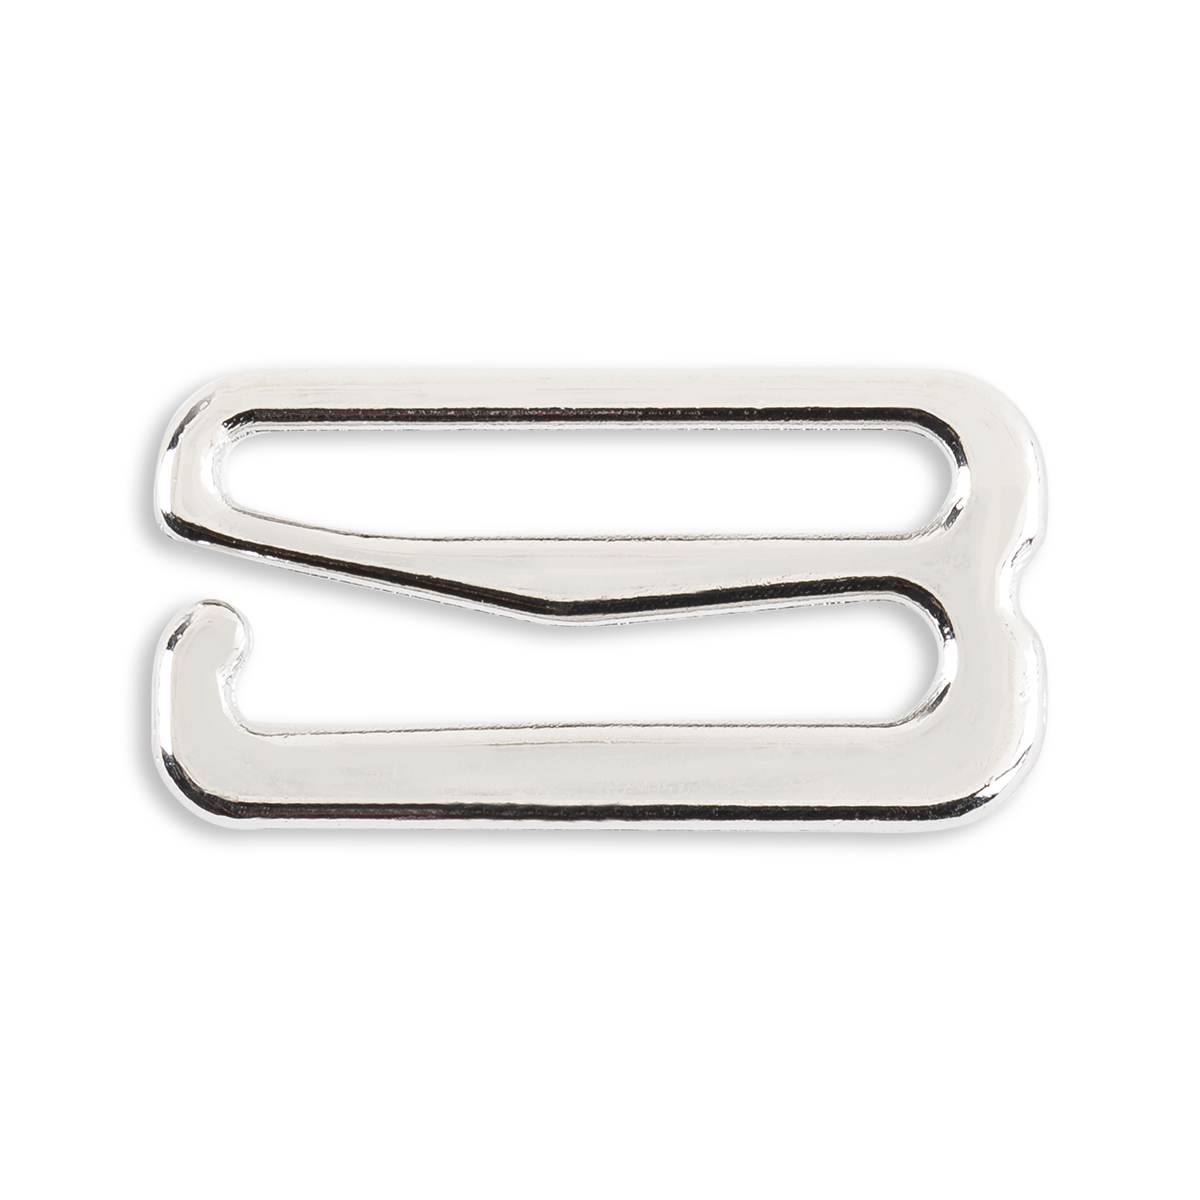 Metal Lingerie Strap Hooks - 3/8 - 12/Pack - Gold